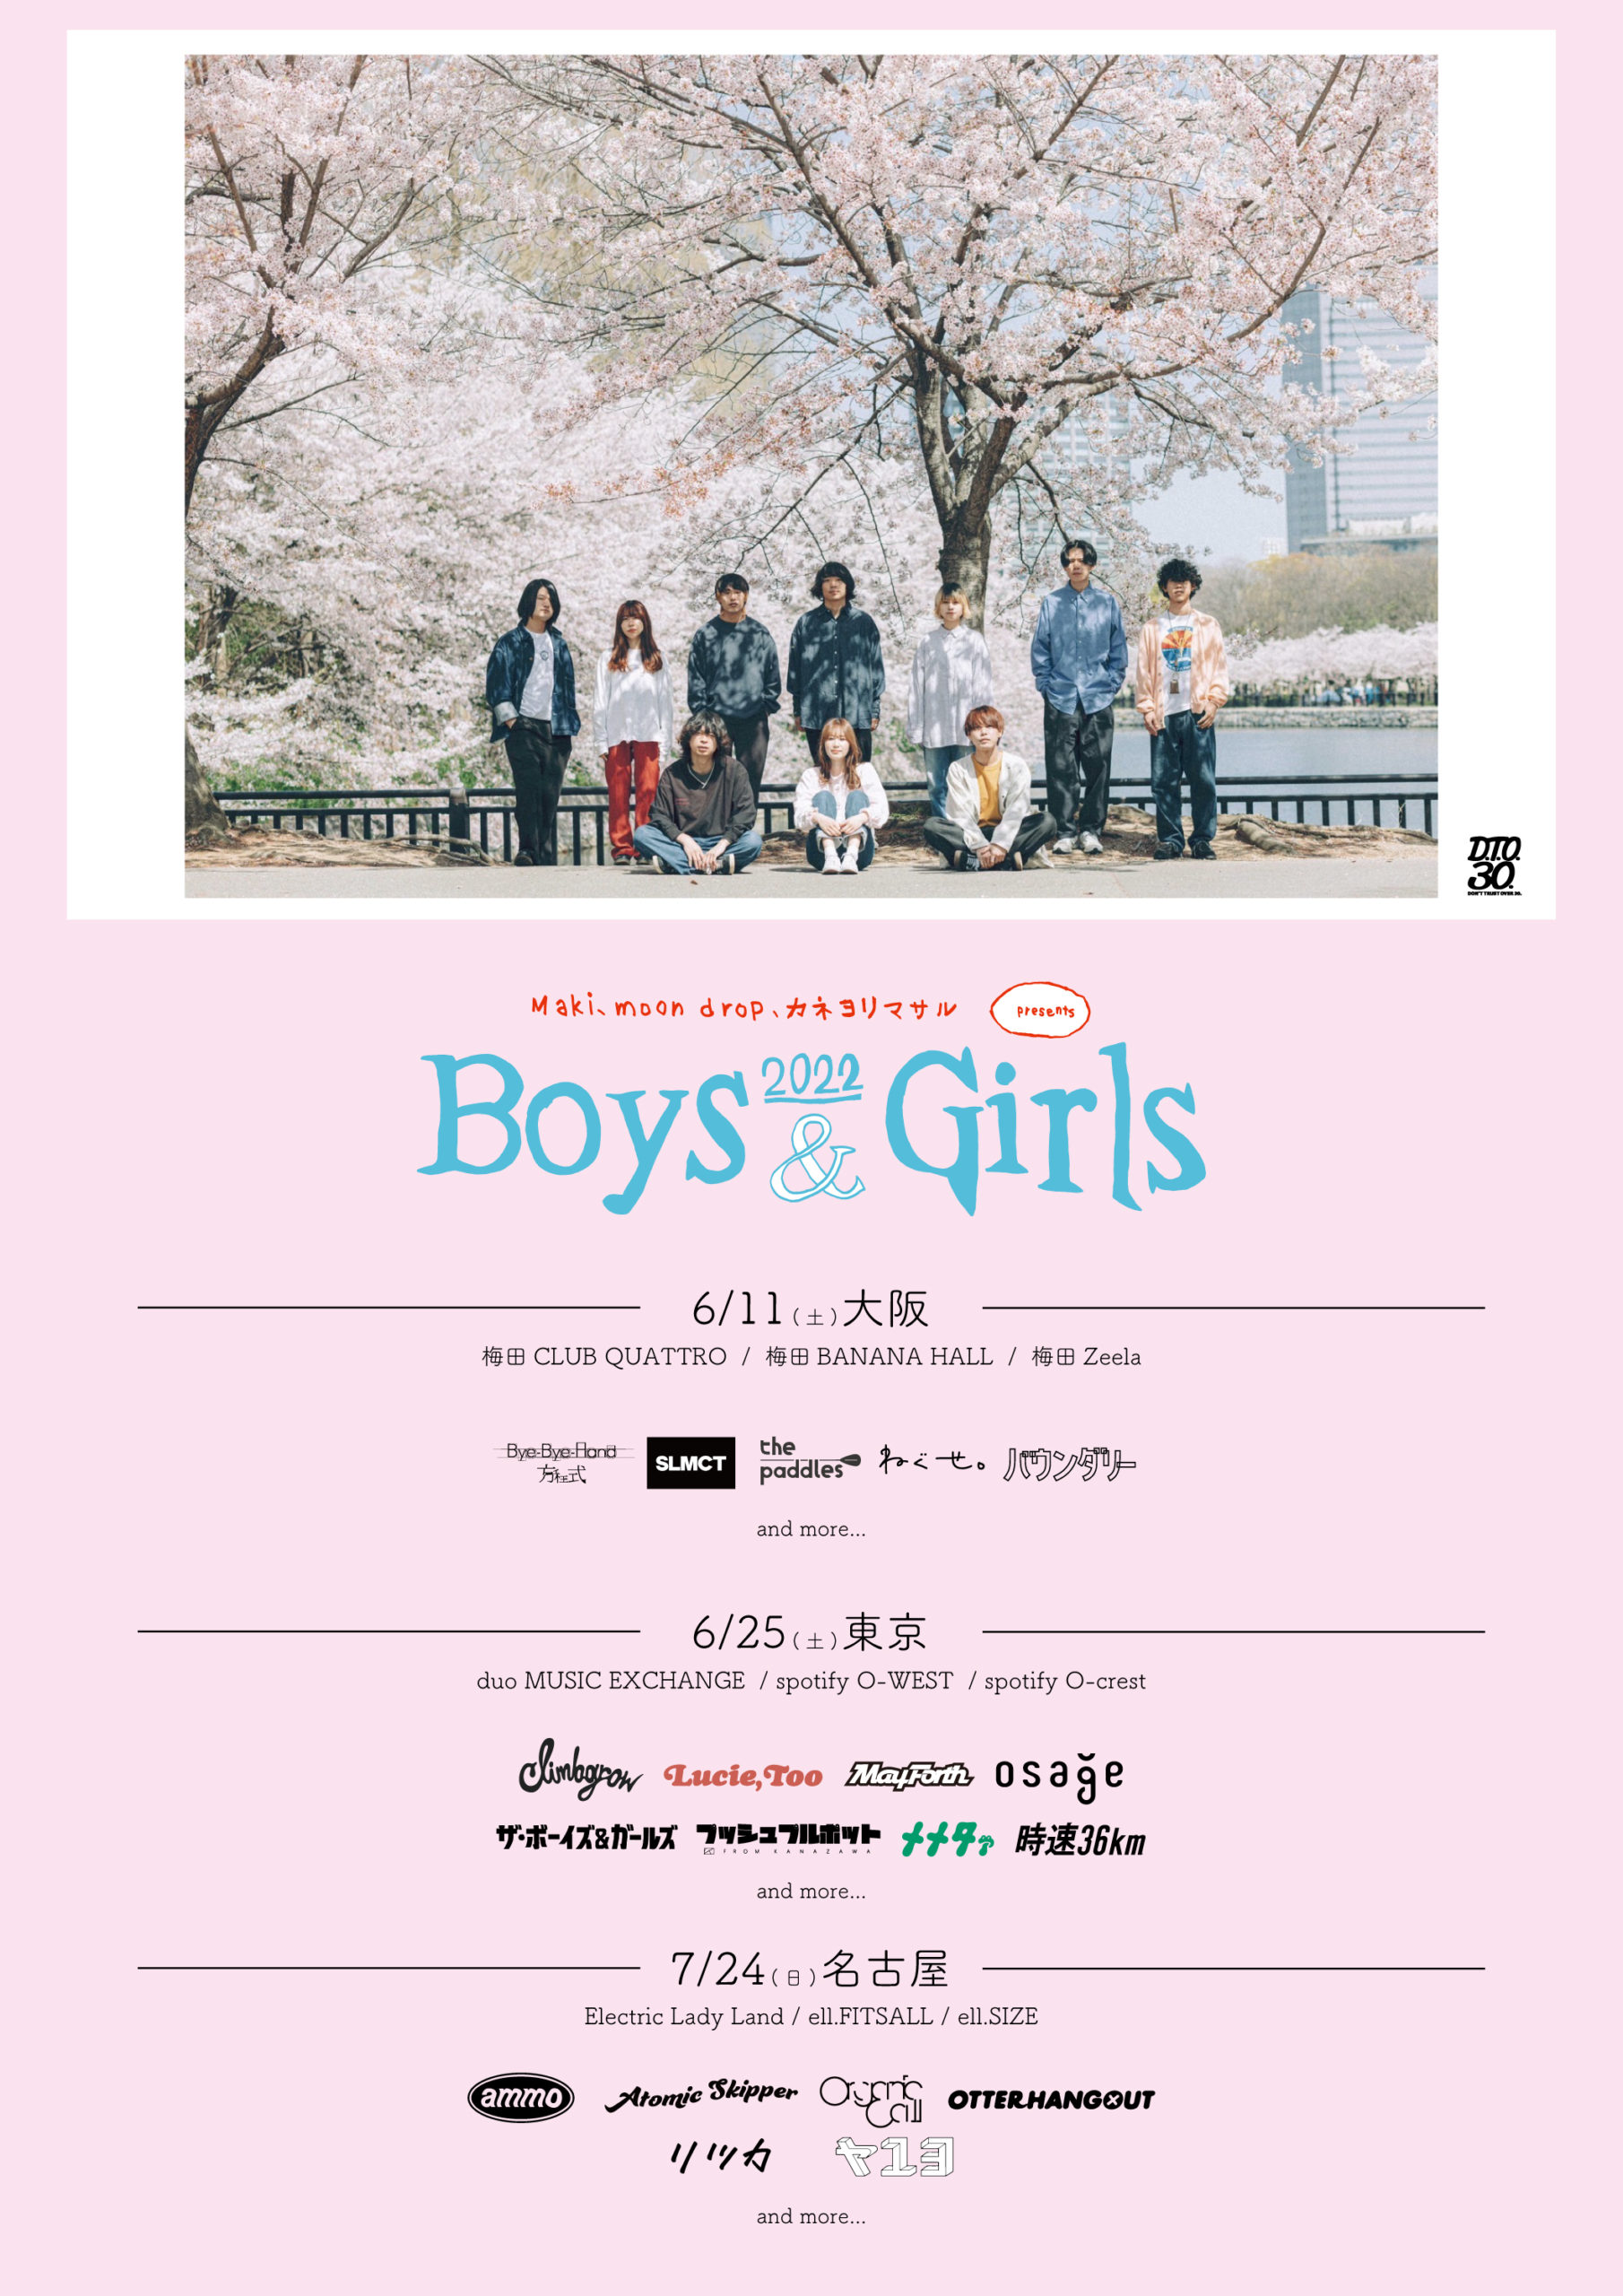 Maki & moon drop & カネヨリマサル presents 【Boys & Girls】